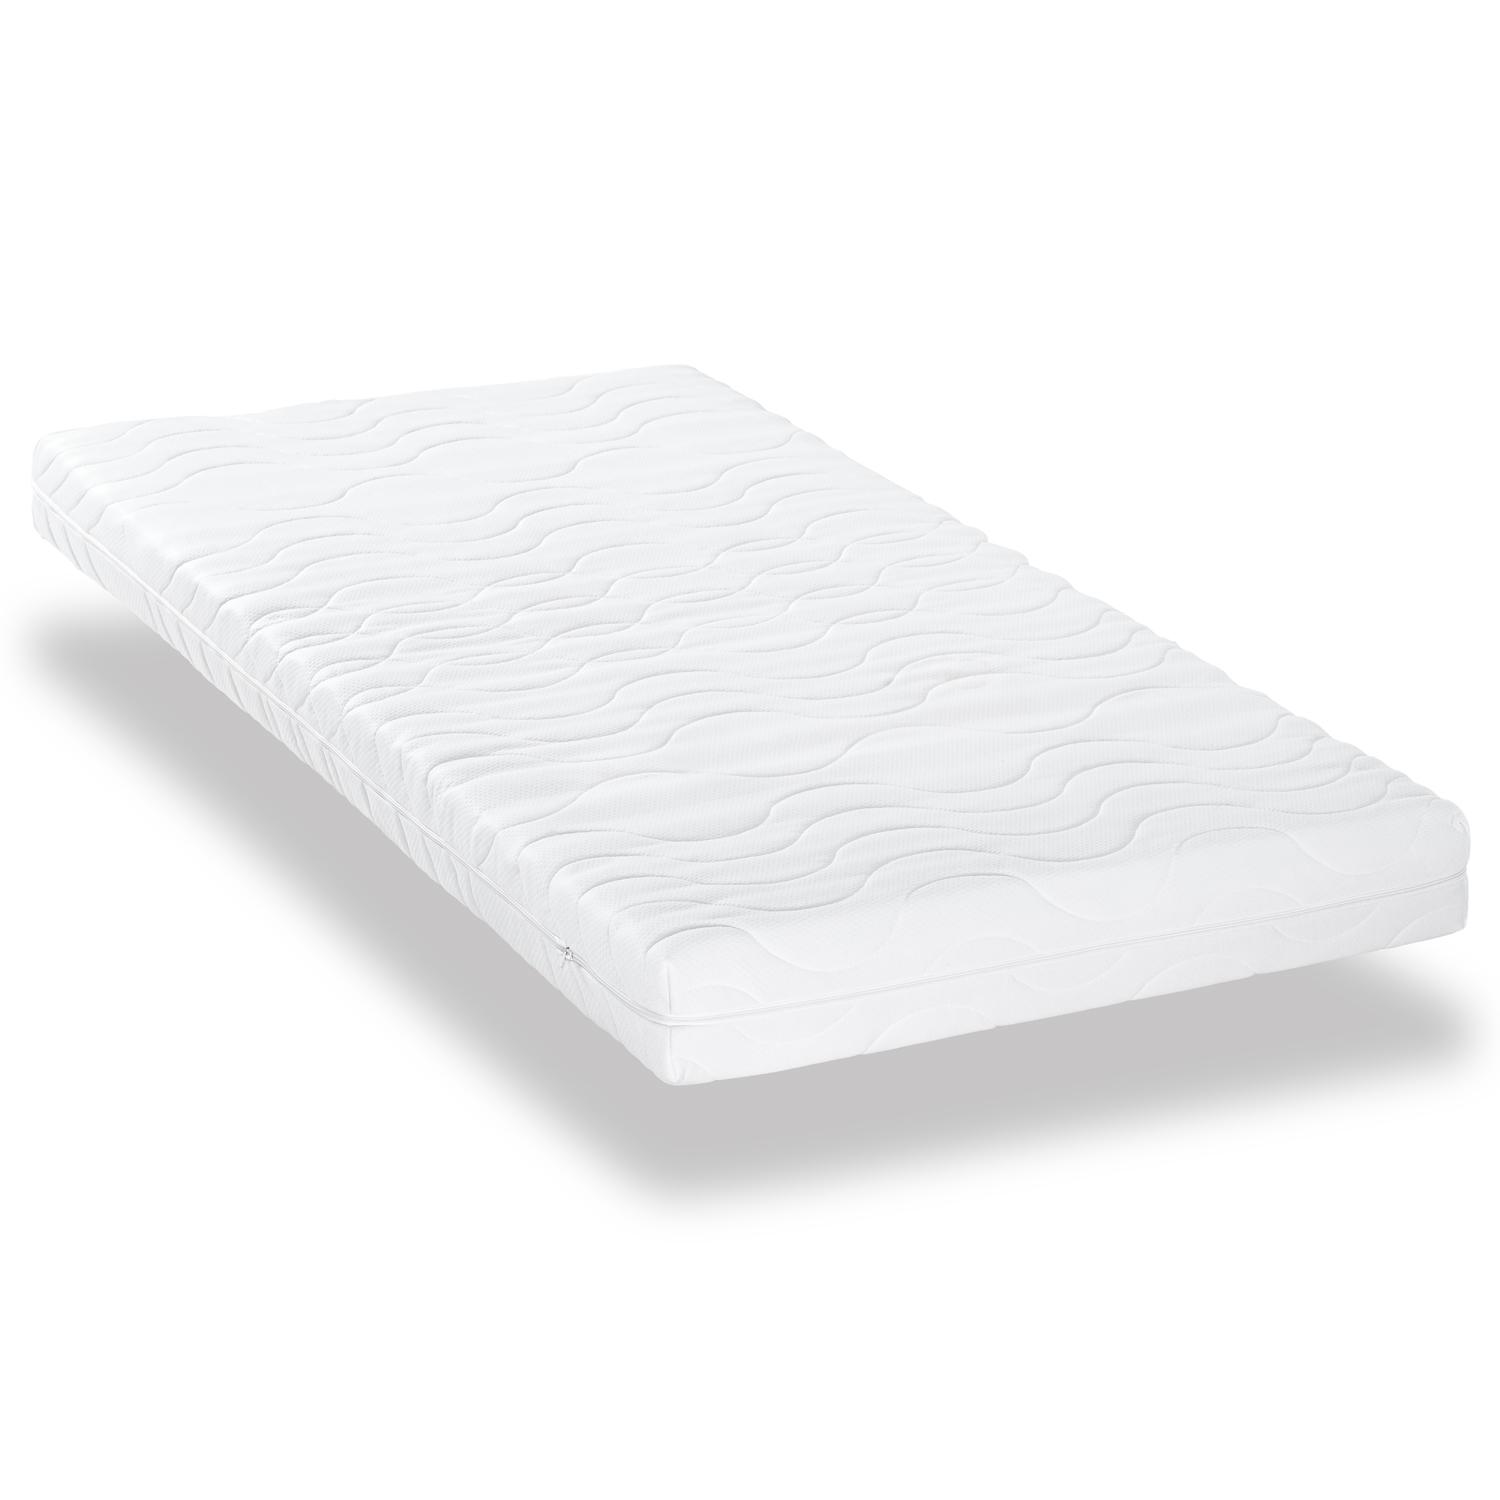 Premium 7-zone mattress 100x200 cm CloudComfort, height 15 cm, firmness level H2/H3